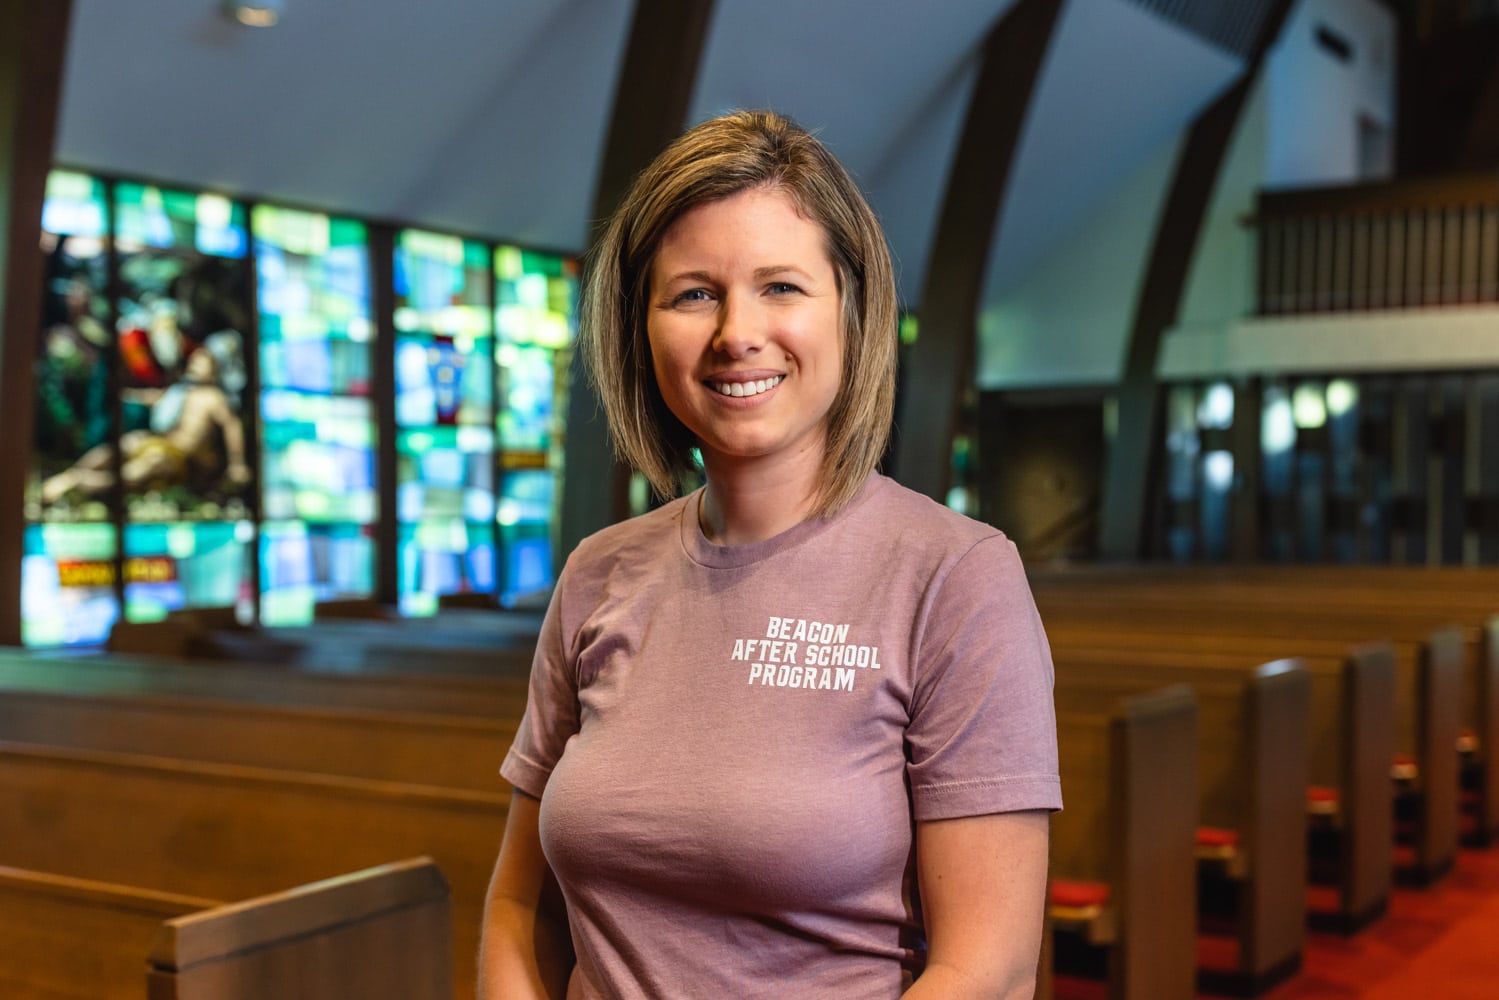 Melissa Keyser, wearing a purple shirt, standing in a church pew.